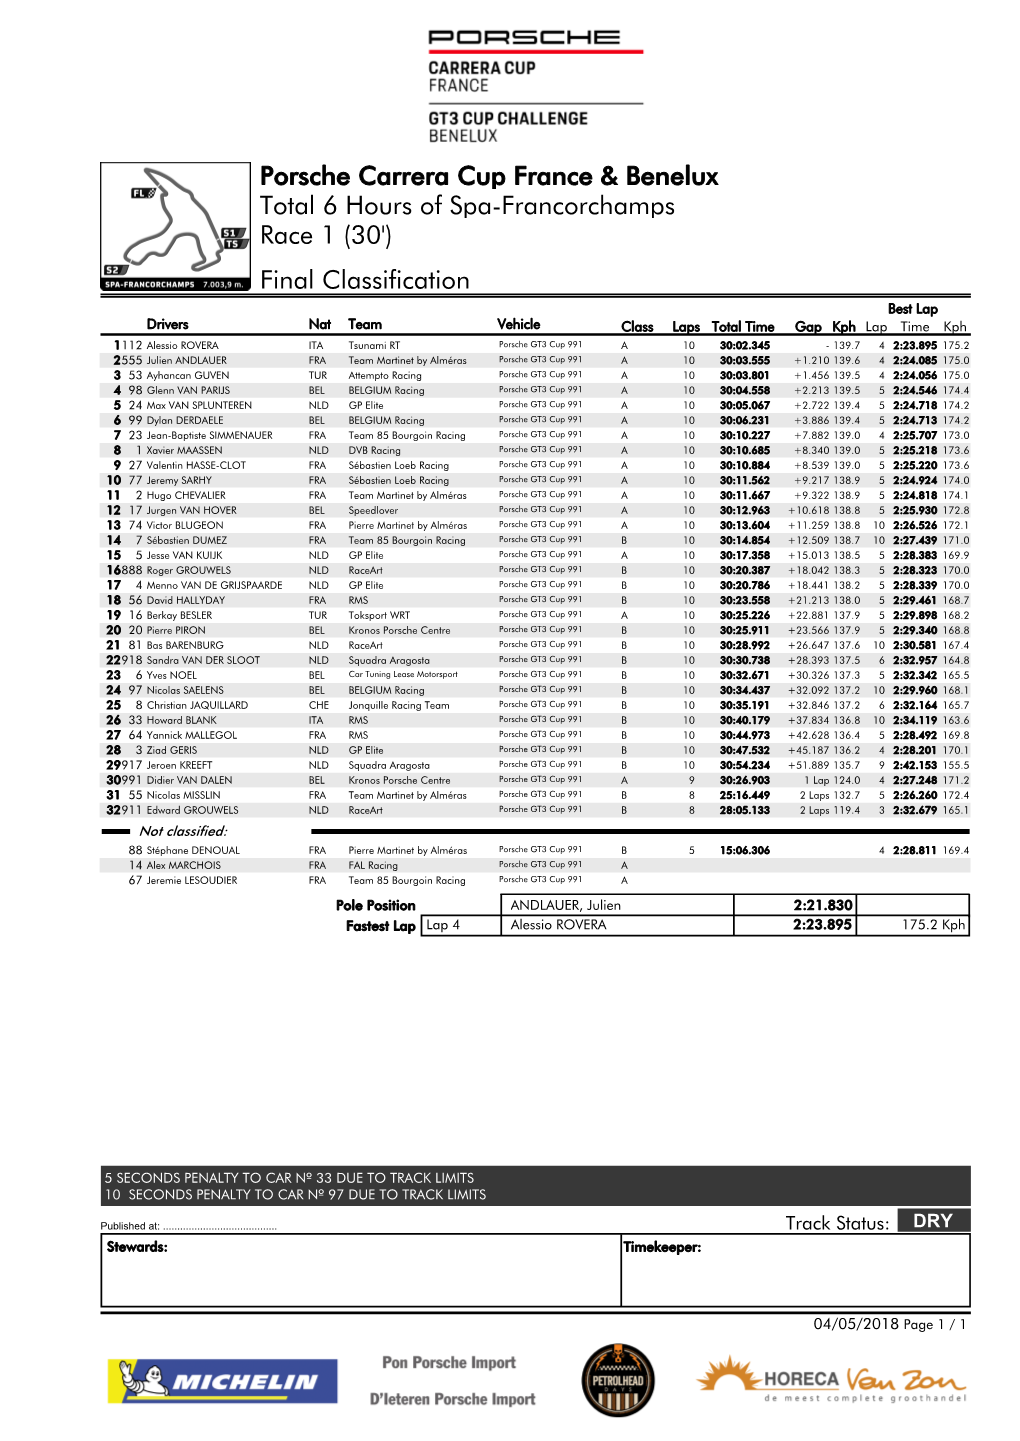 Final Classification Total 6 Hours of Spa-Francorchamps Porsche